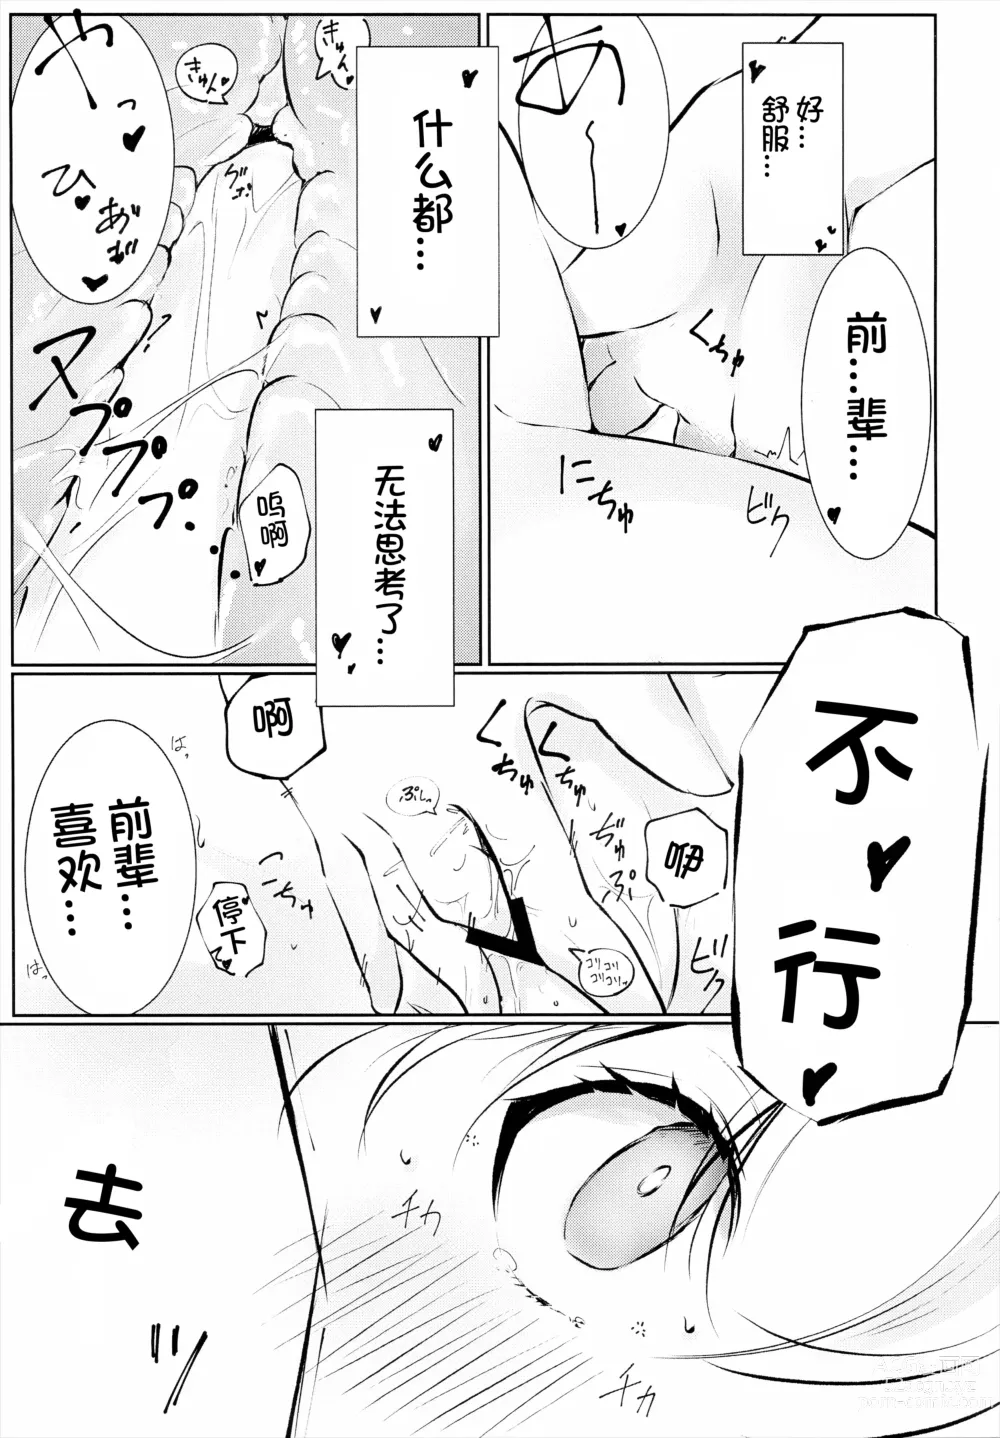 Page 29 of doujinshi Hakusyoku Aisei